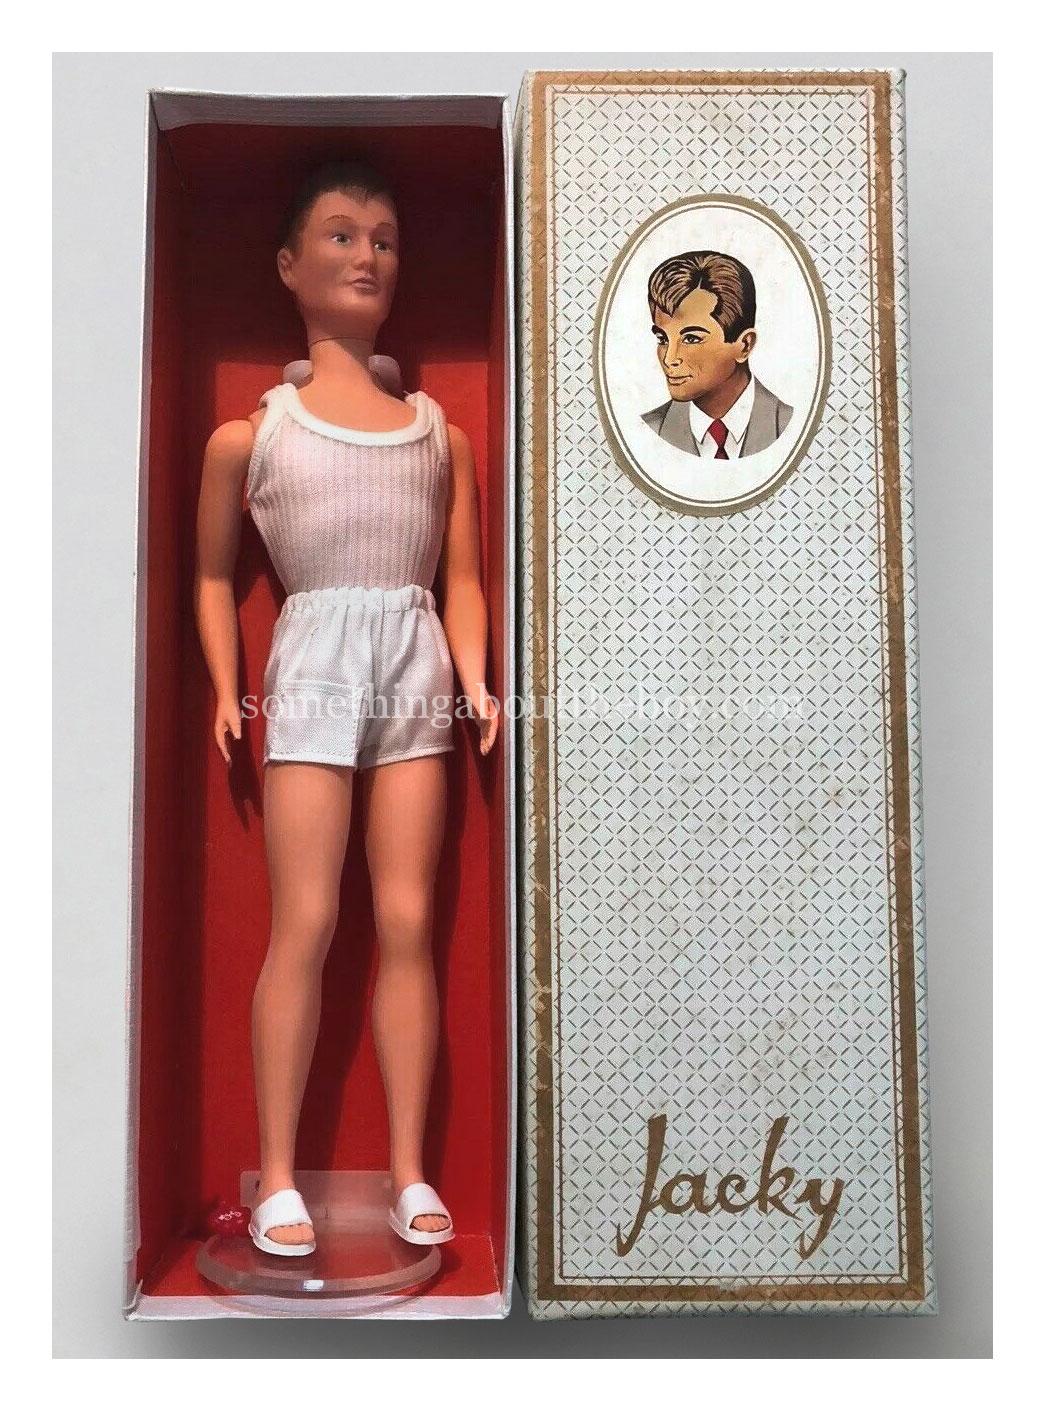 c. 1965-66 Jacky by GéGé France in original packaging